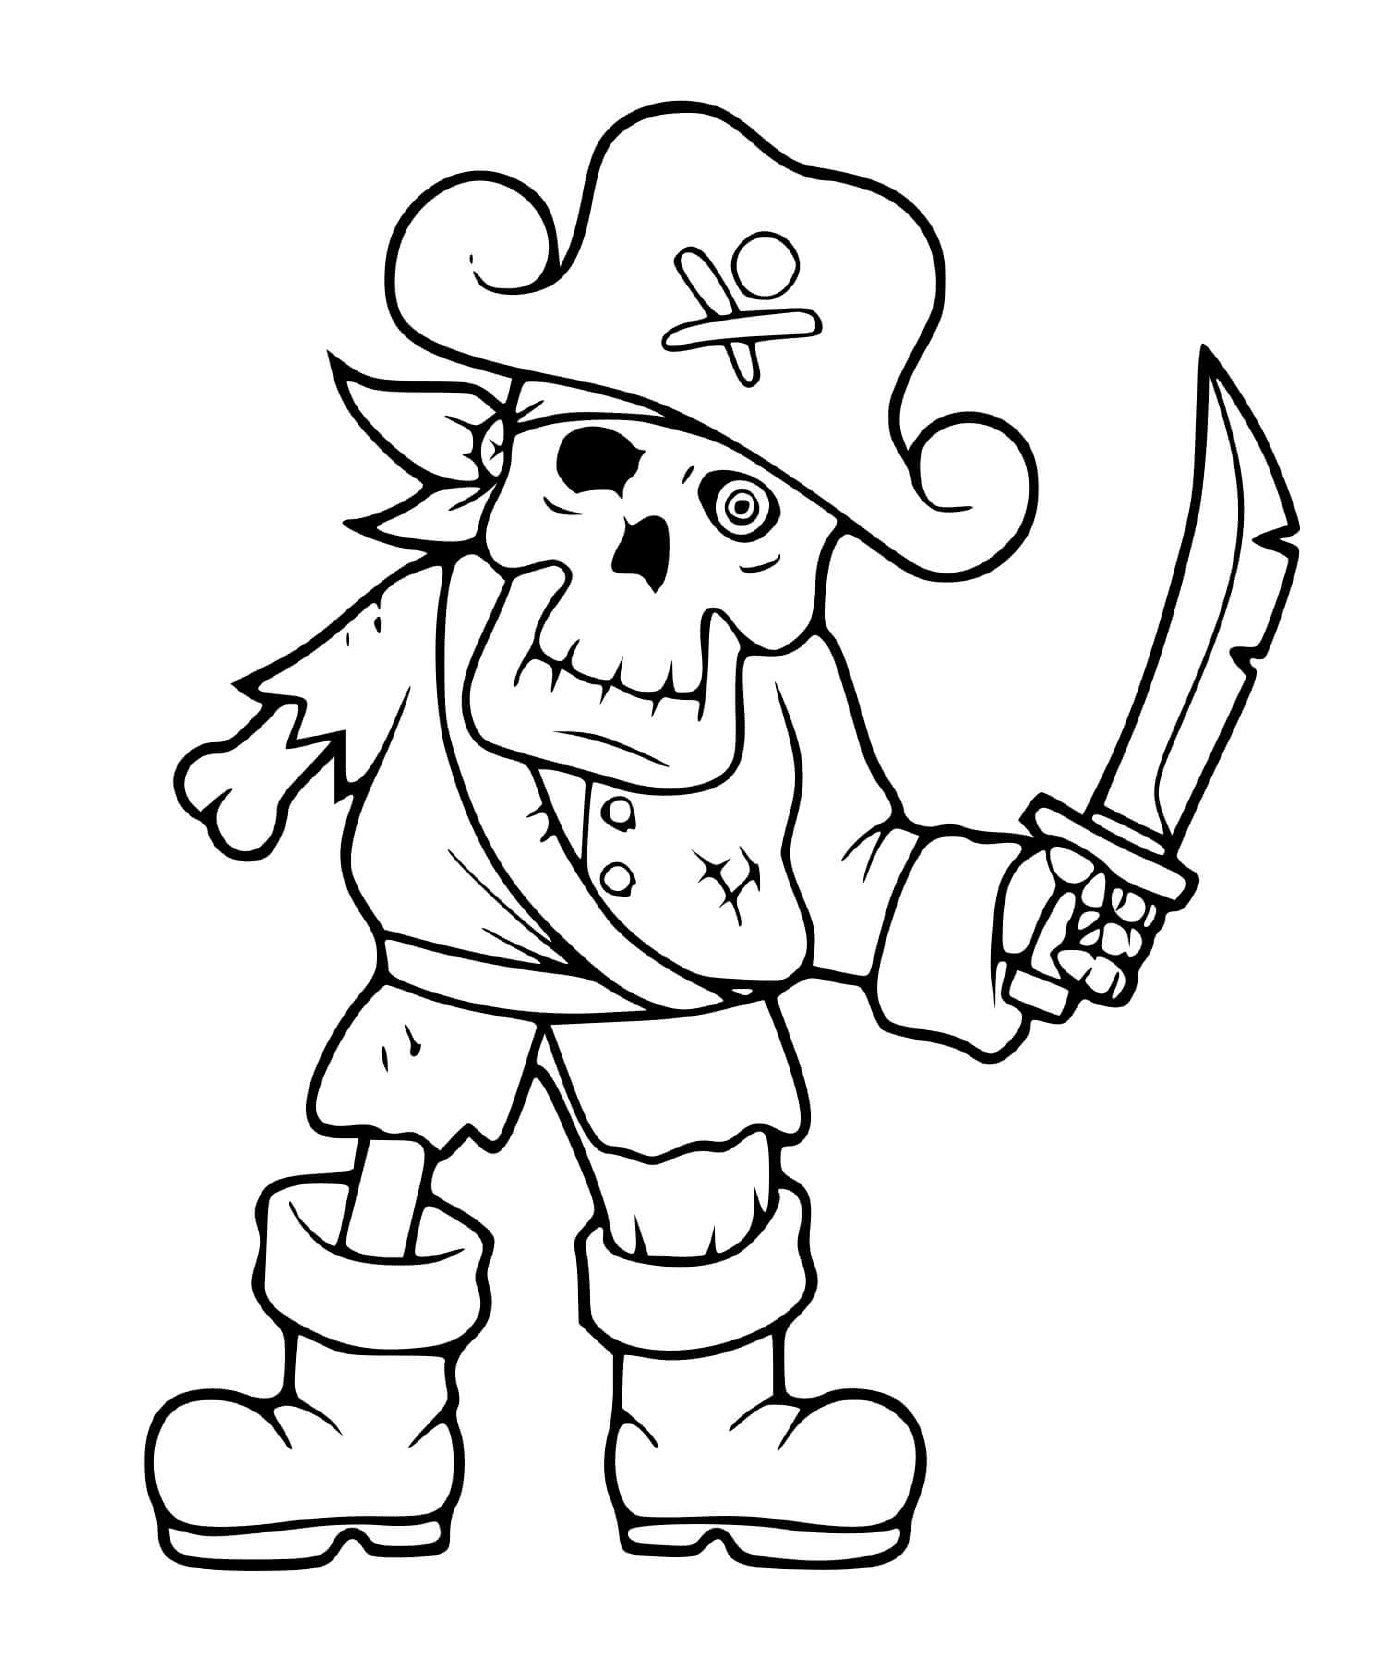   Squelette pirate effrayant 